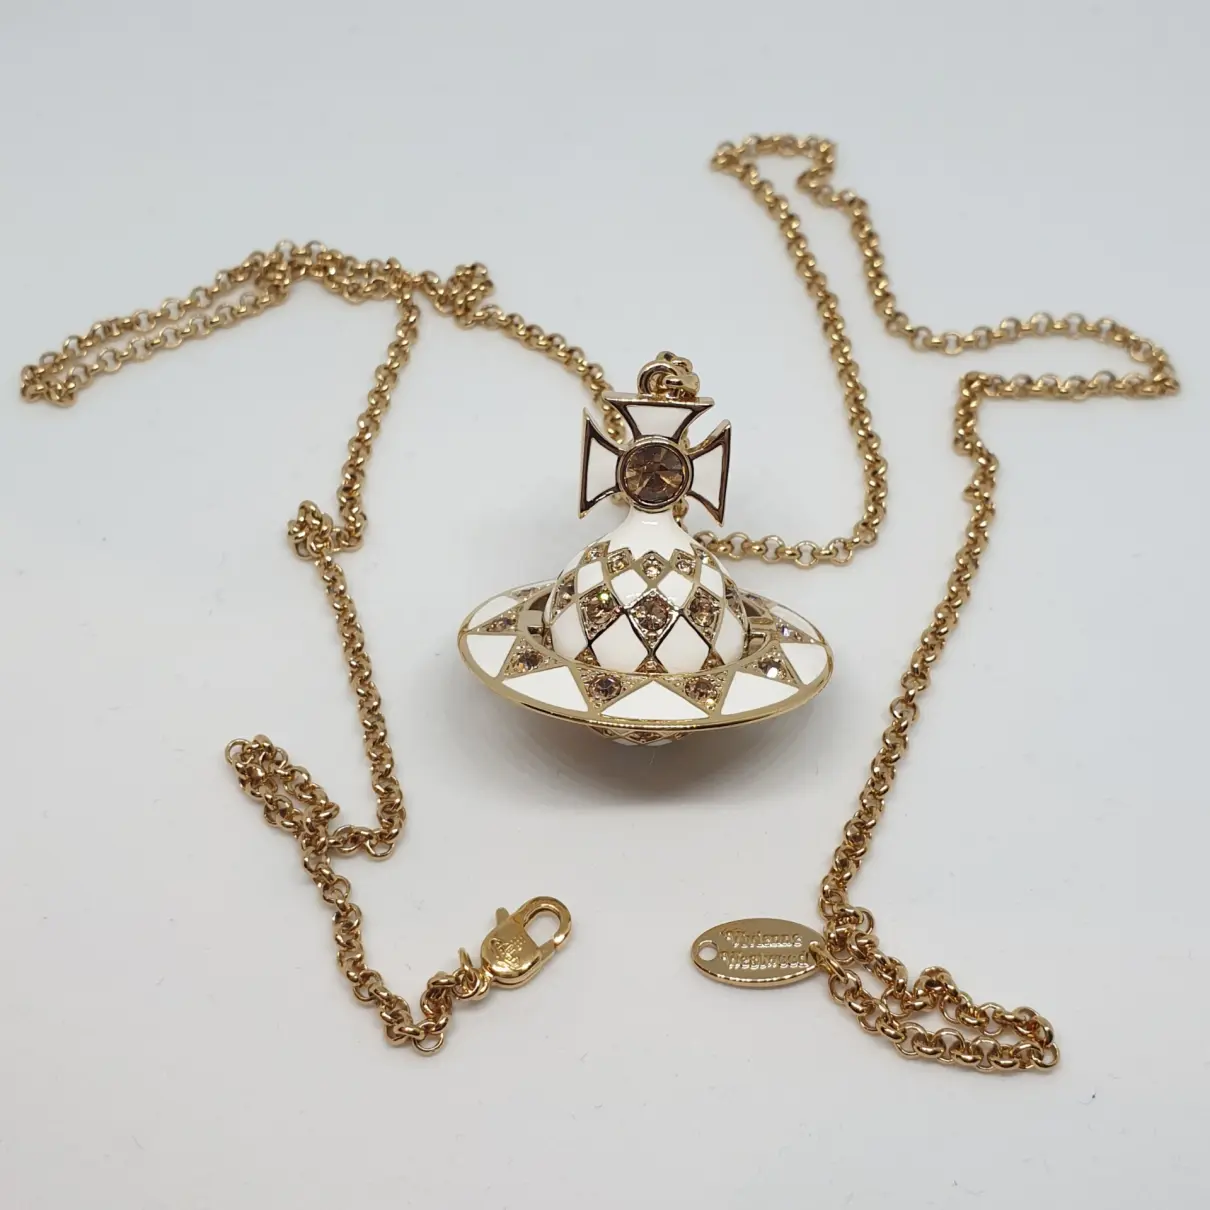 Buy Vivienne Westwood Necklace online